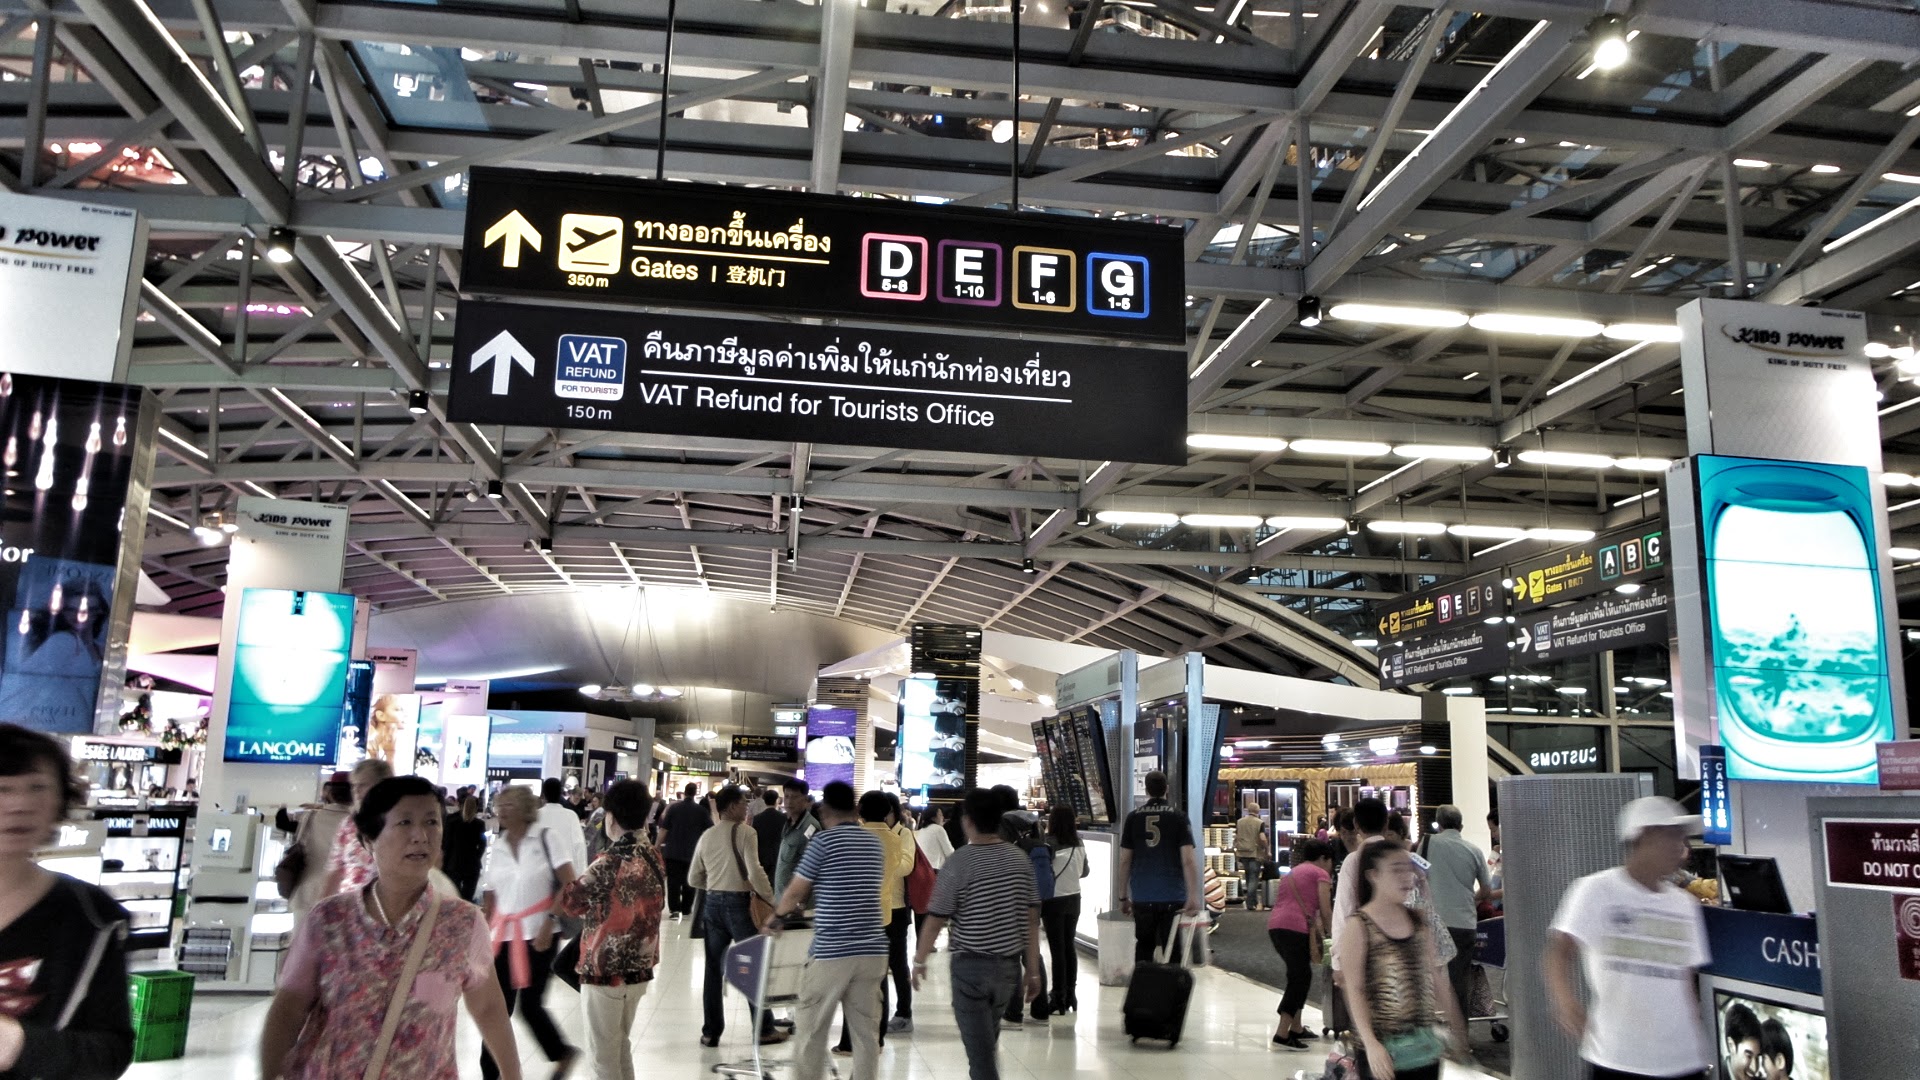 Traffic surge at Suvarnabhumi Airport following Thailand Pass removal